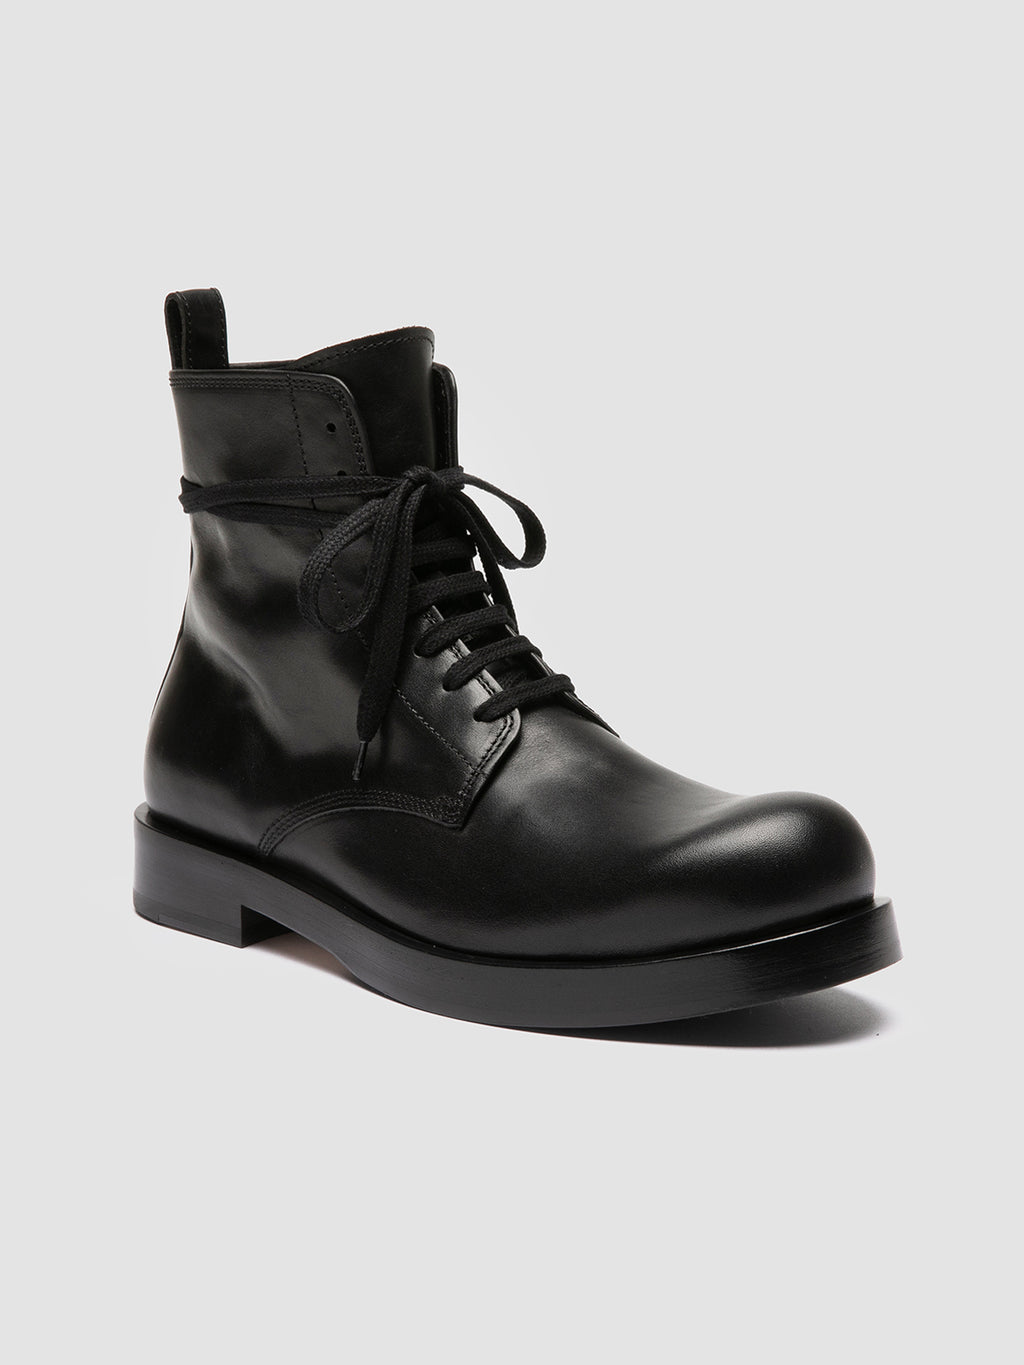 BULLA 002 - Black Leather Lace-up Boots Men Officine Creative - 3